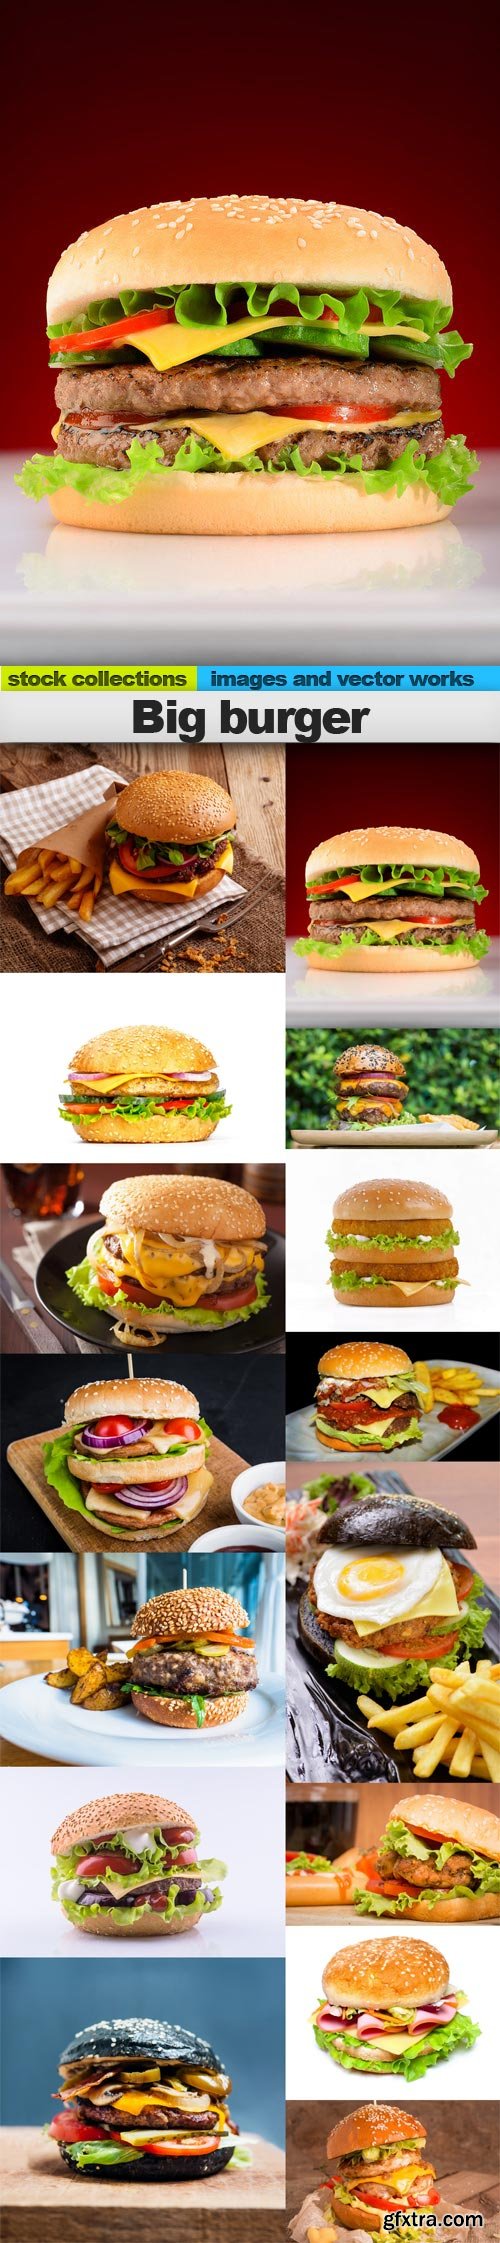 Big burger, 15 x UHQ JPEG